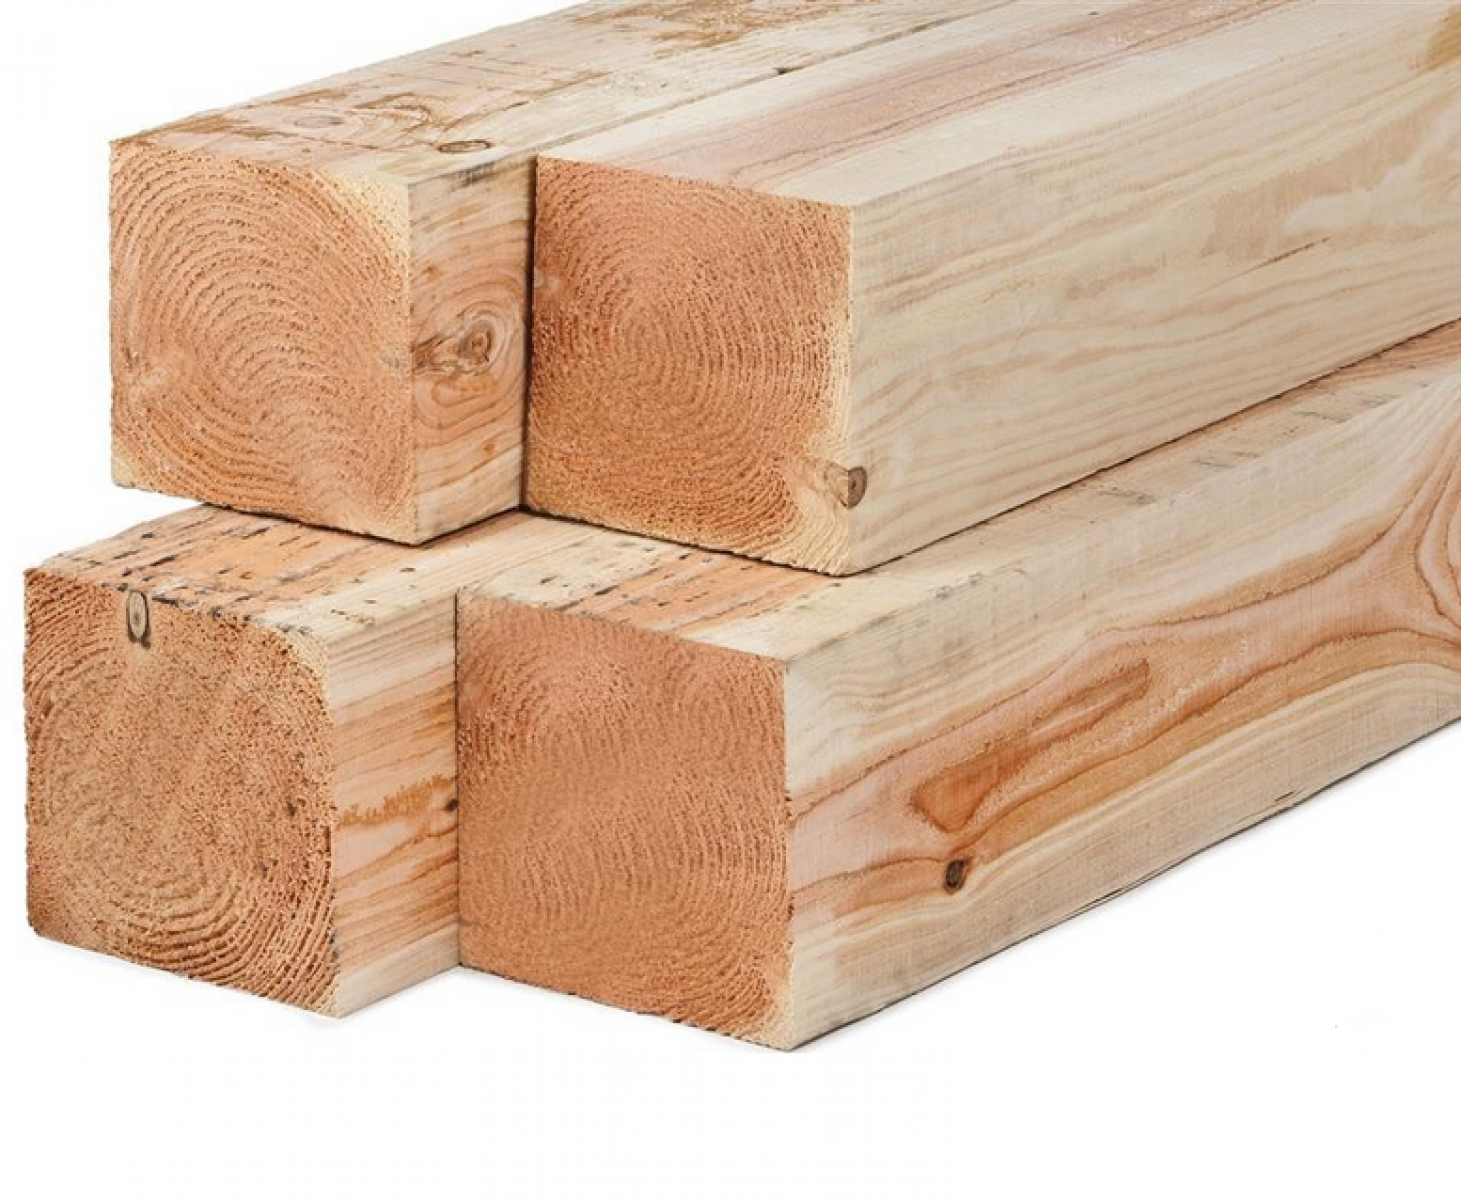 Lariks/Douglas palen onbehandeld (vers hout) 20x20x400 cm